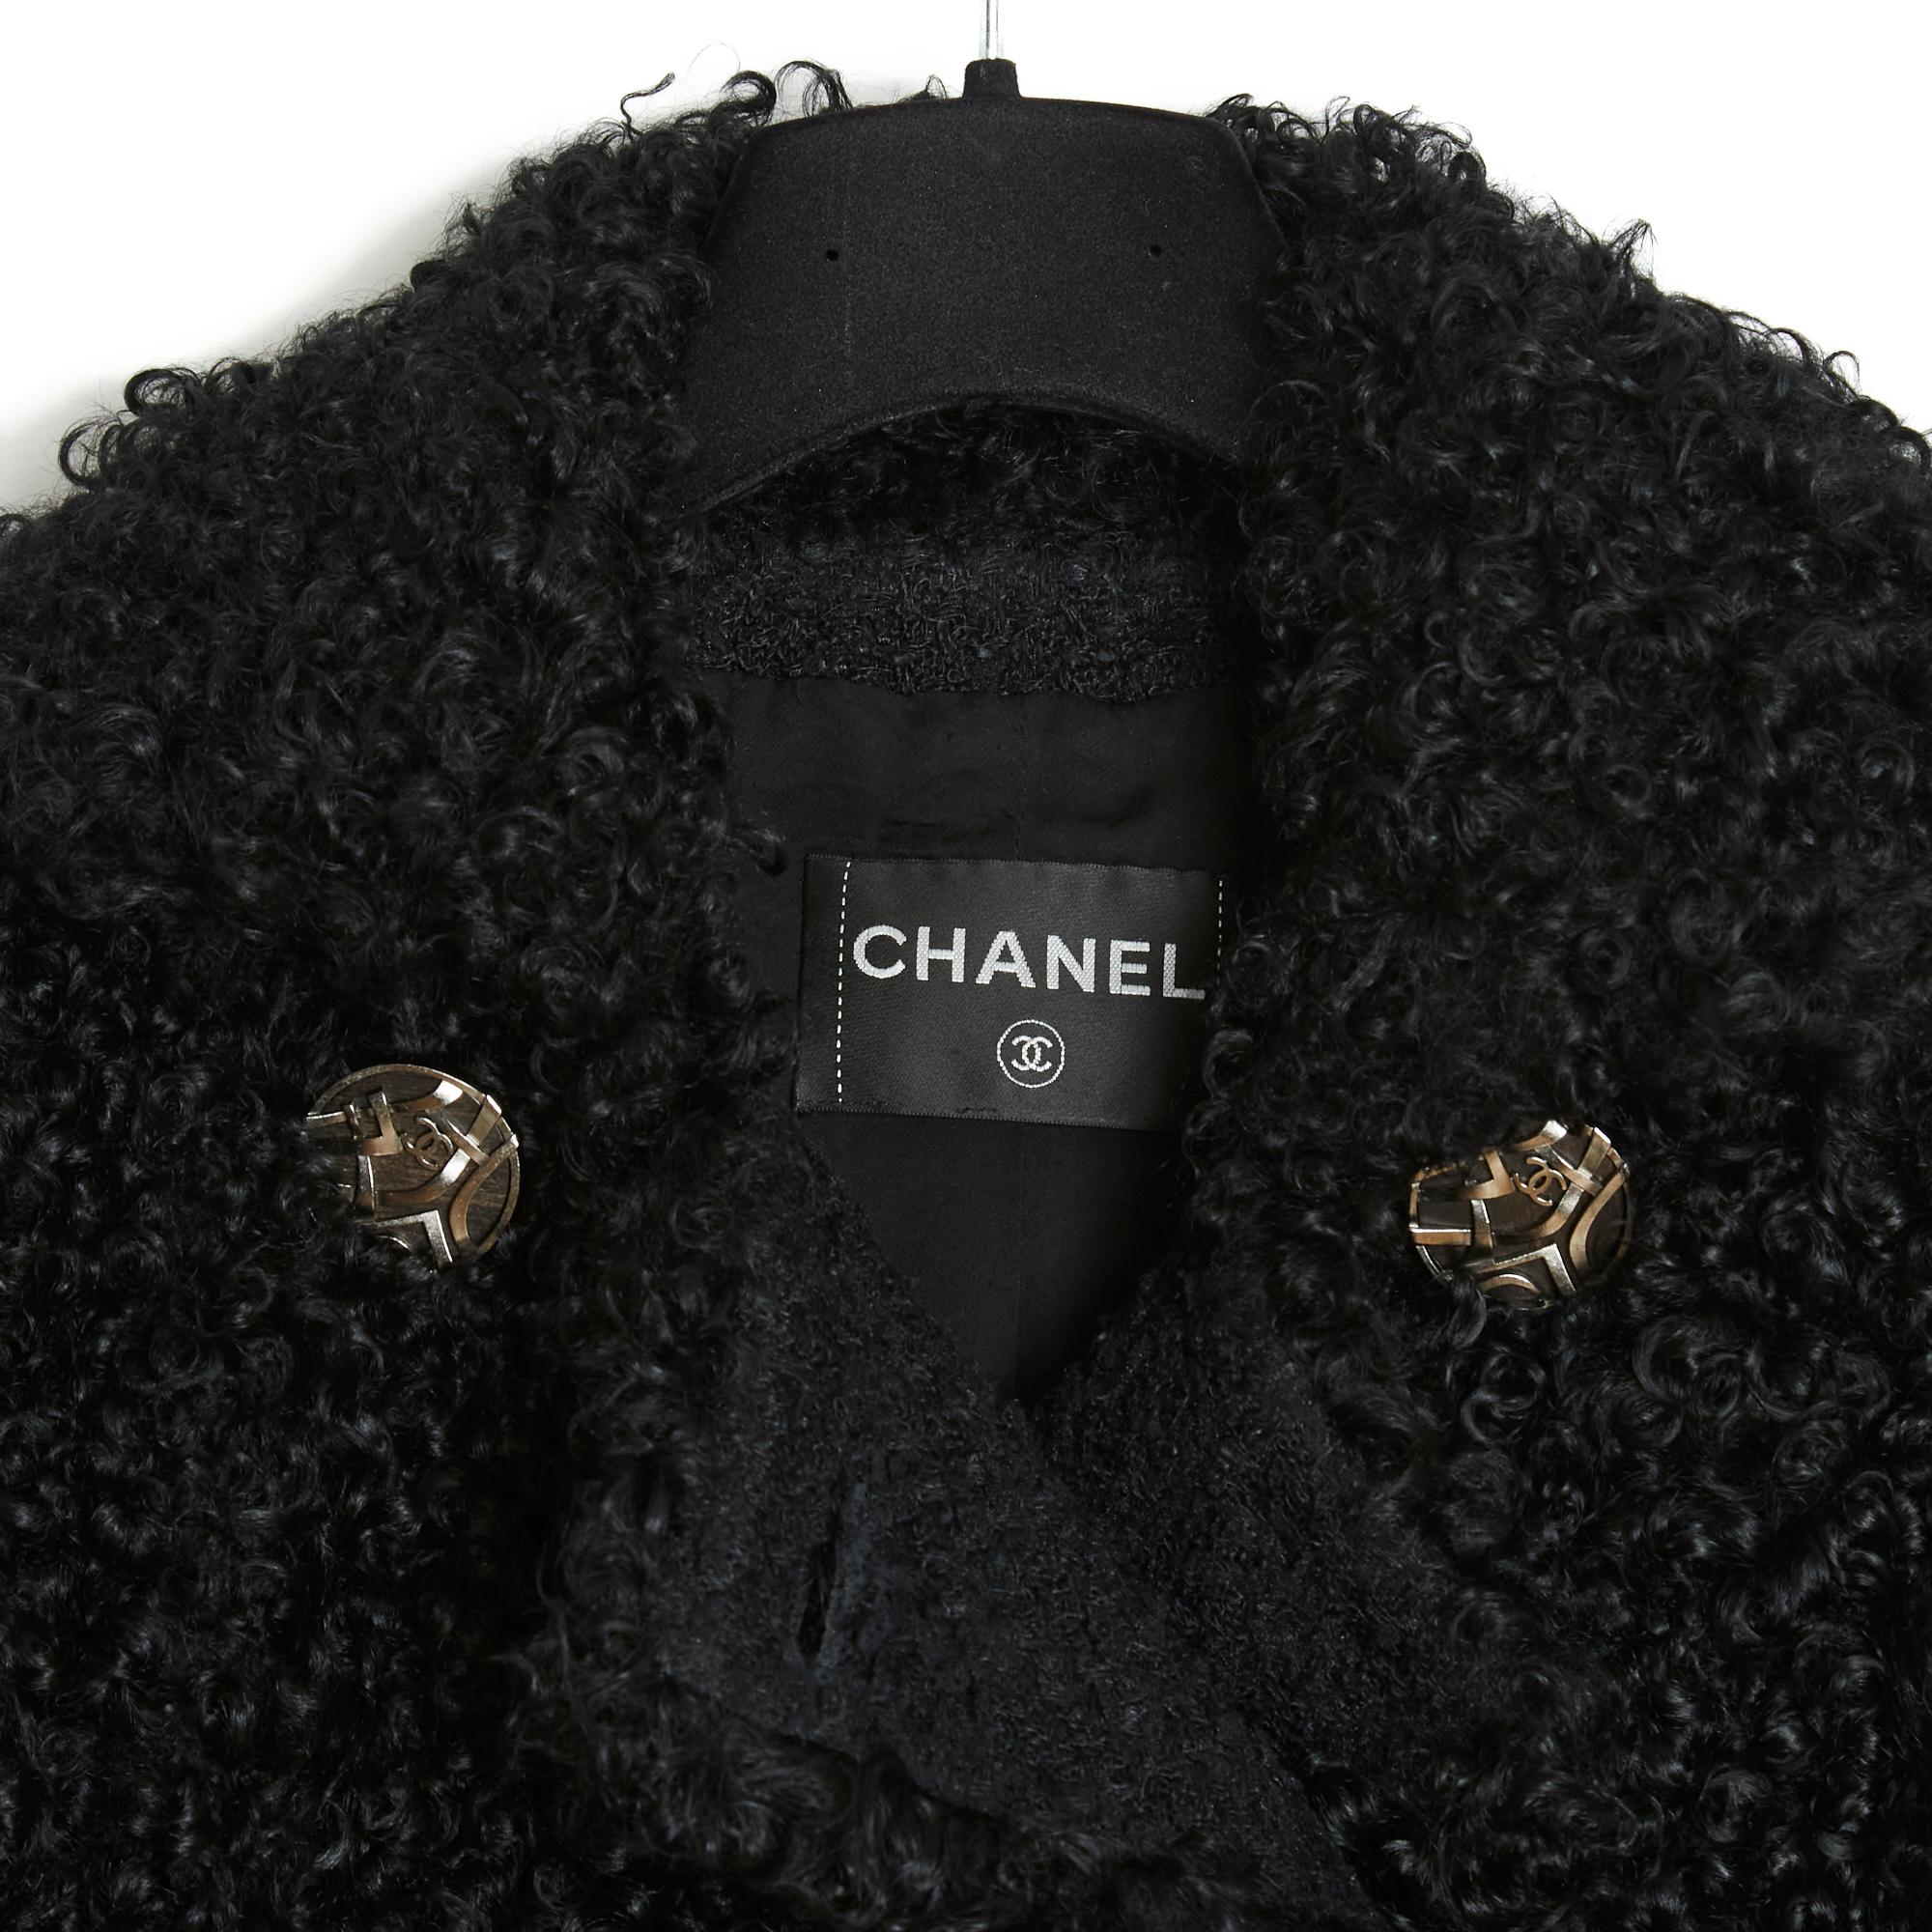 Chanel FR36 Black Shearling Pea Coat Jacket 1